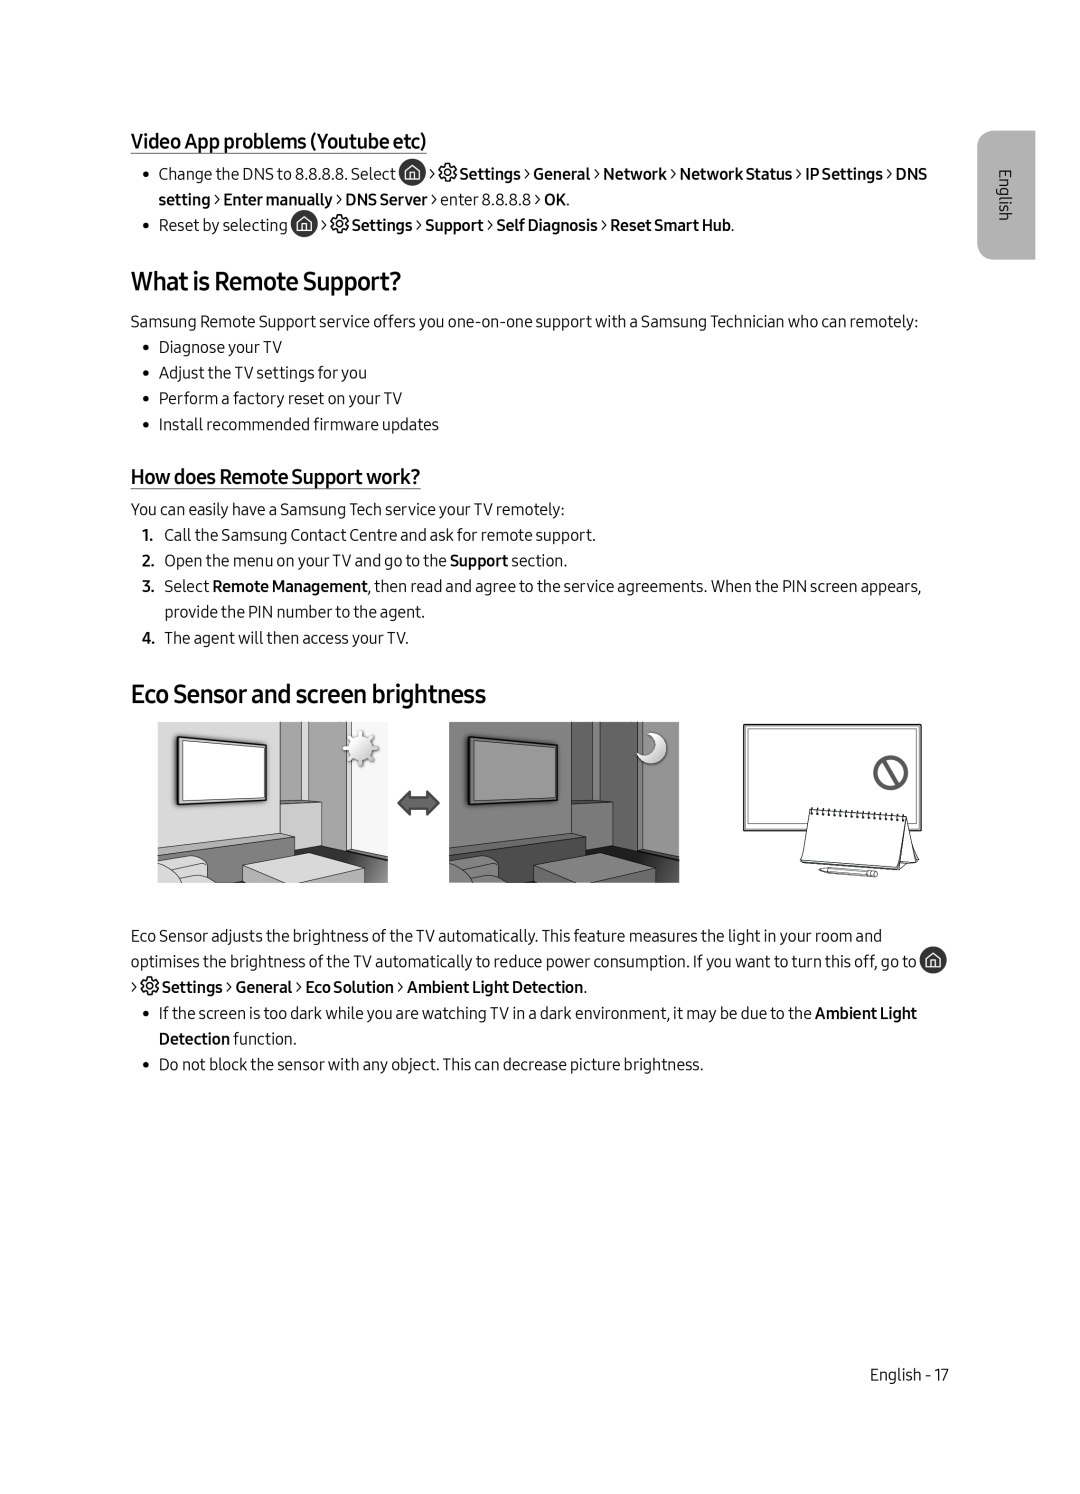 Samsung UE49MU6440UXZG manual What is Remote Support?, Eco Sensor and screen brightness, Video App problems Youtube etc 